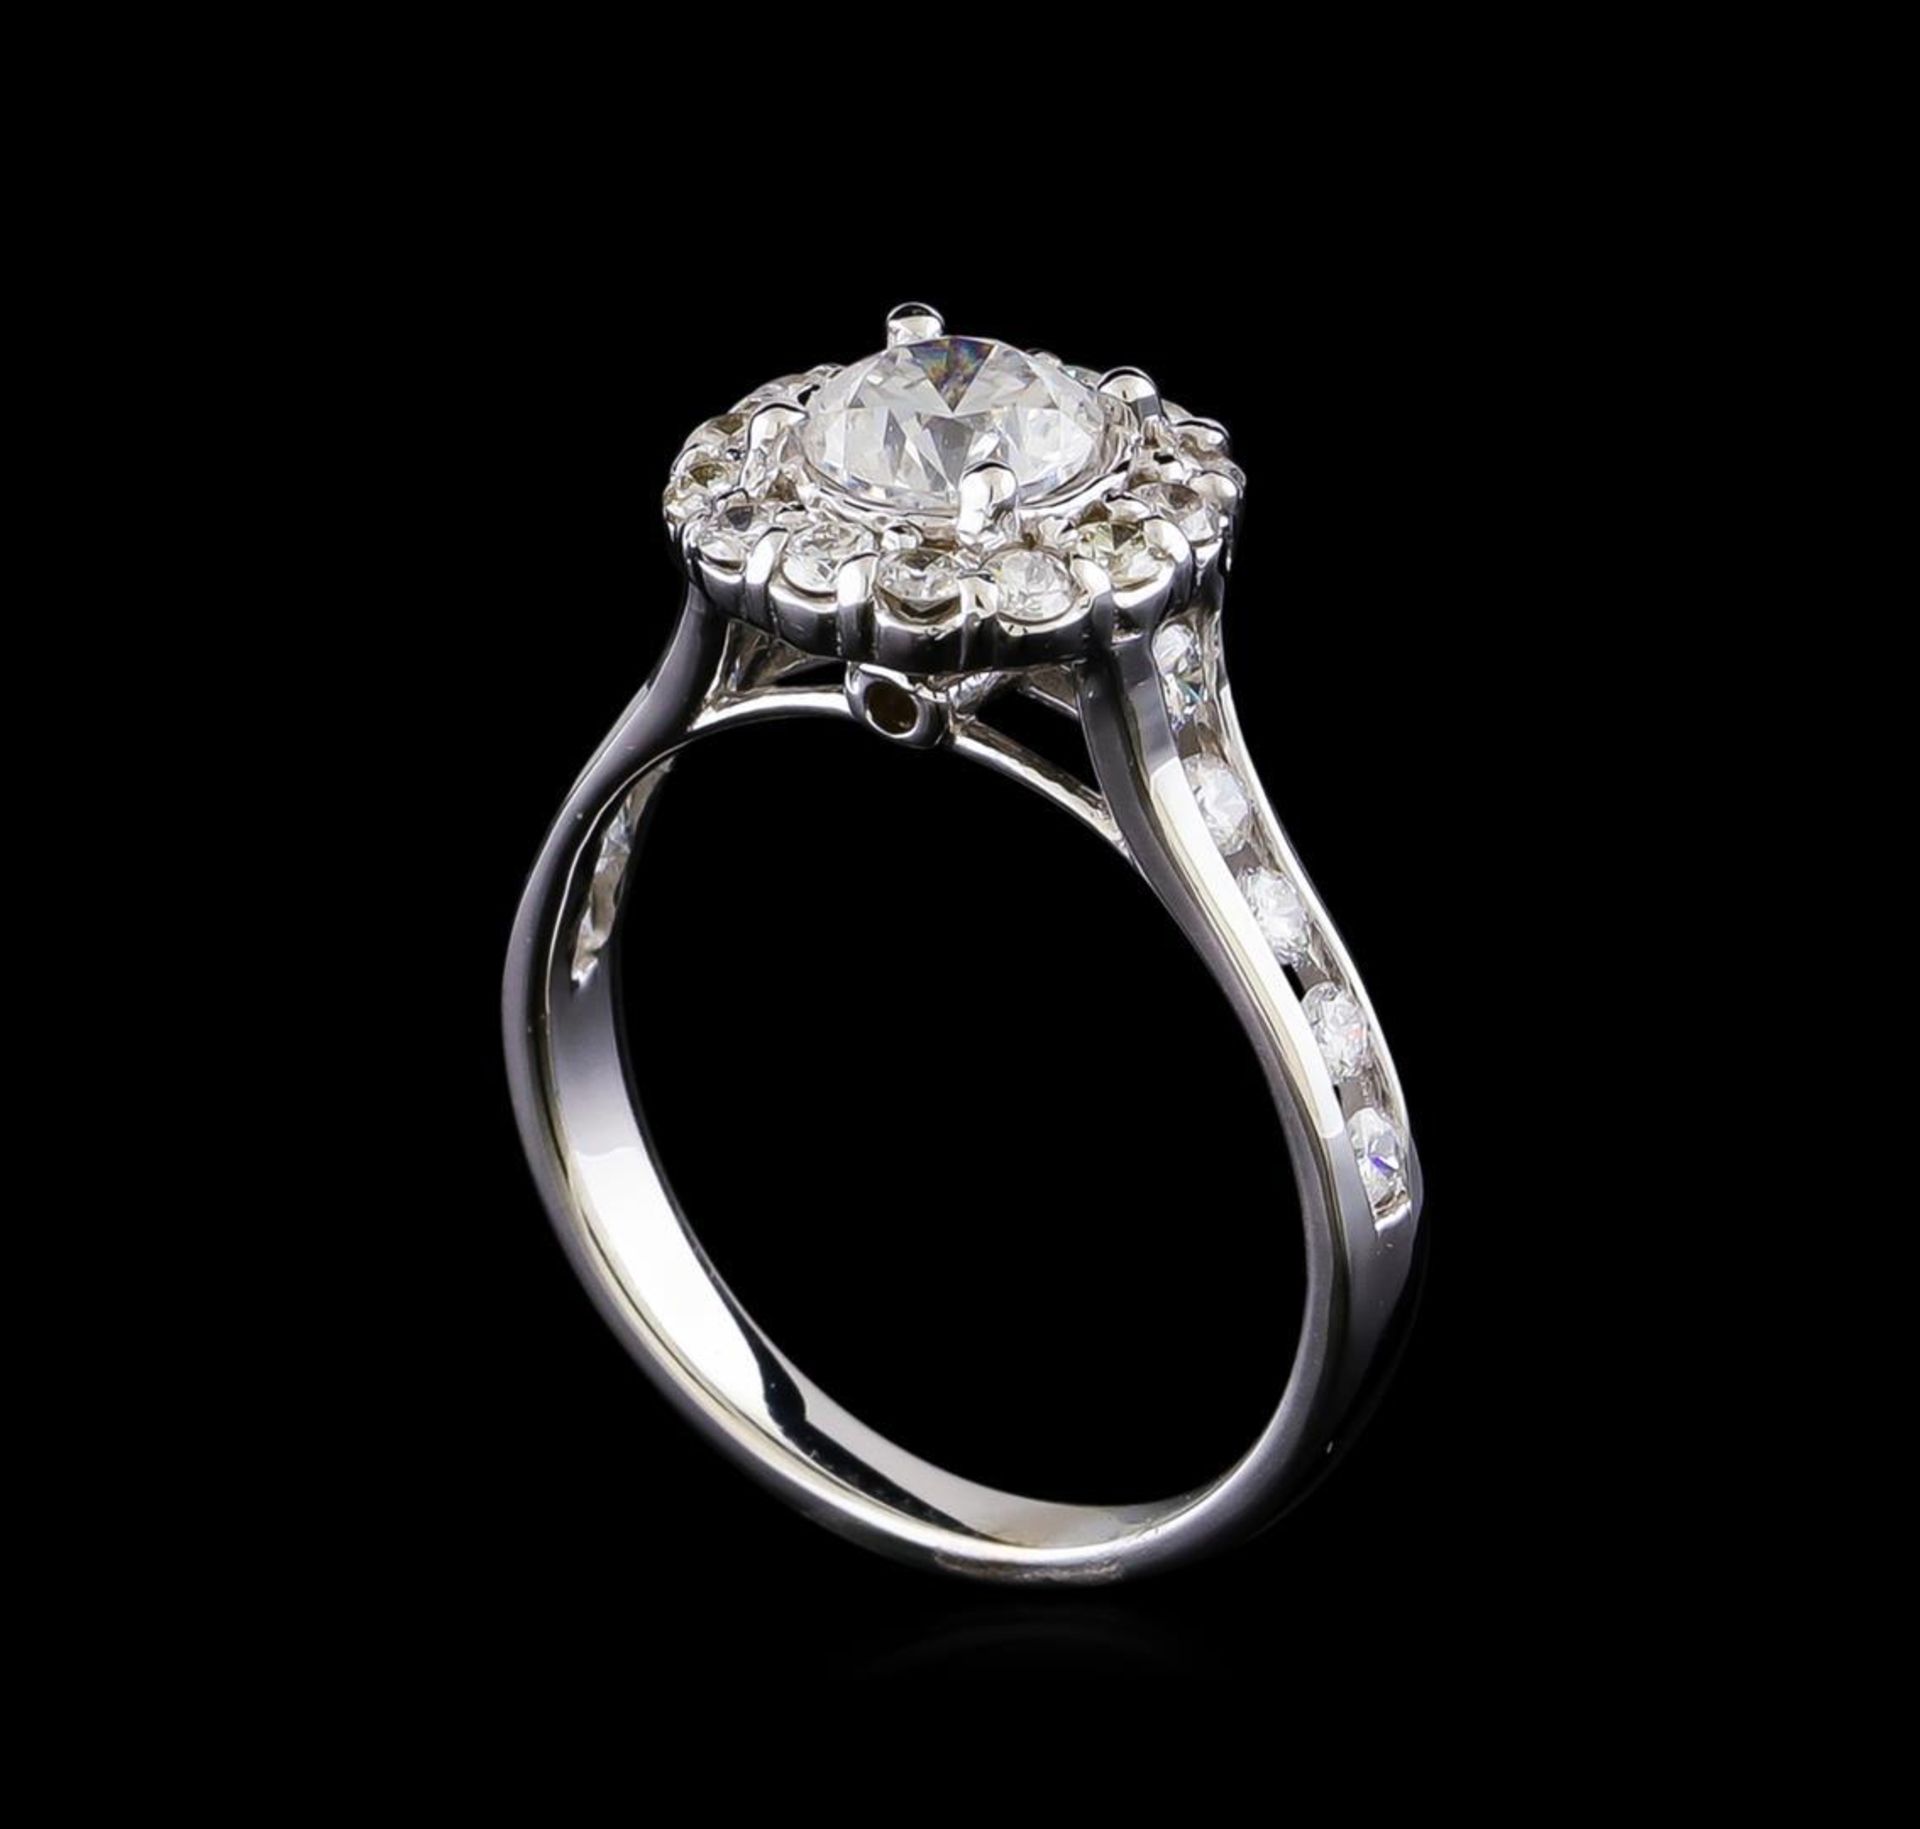 1.49 ctw Diamond Ring - 14KT White Gold - Image 4 of 5